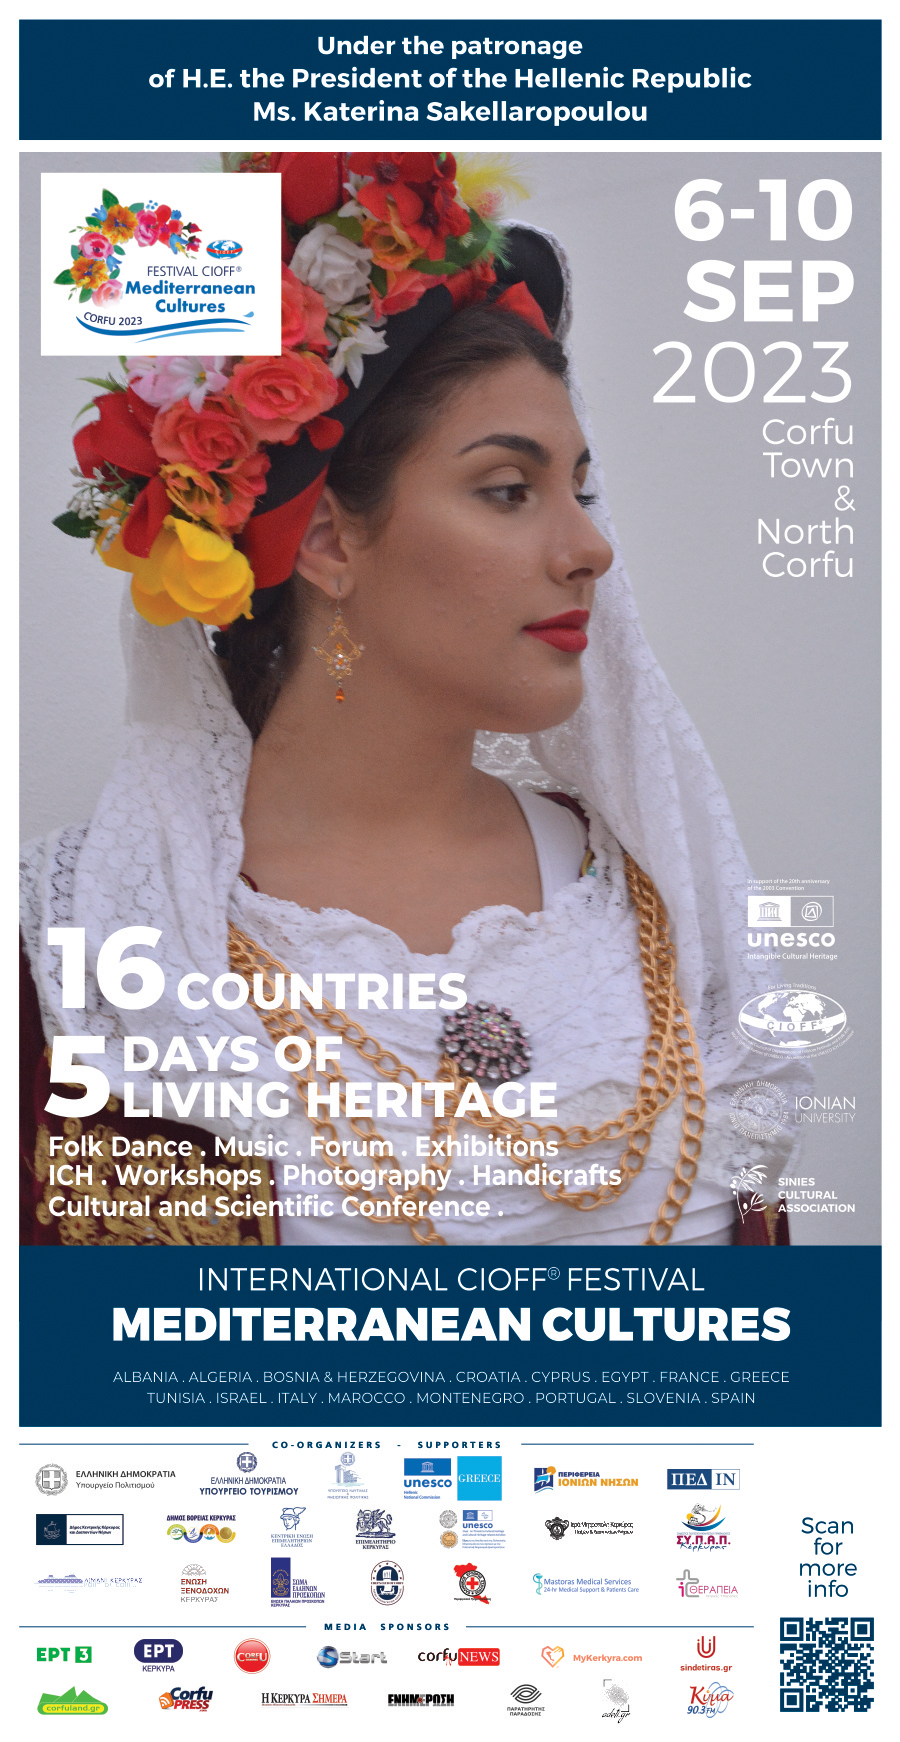 International CIOFF® Festival of Mediterranean Cultures